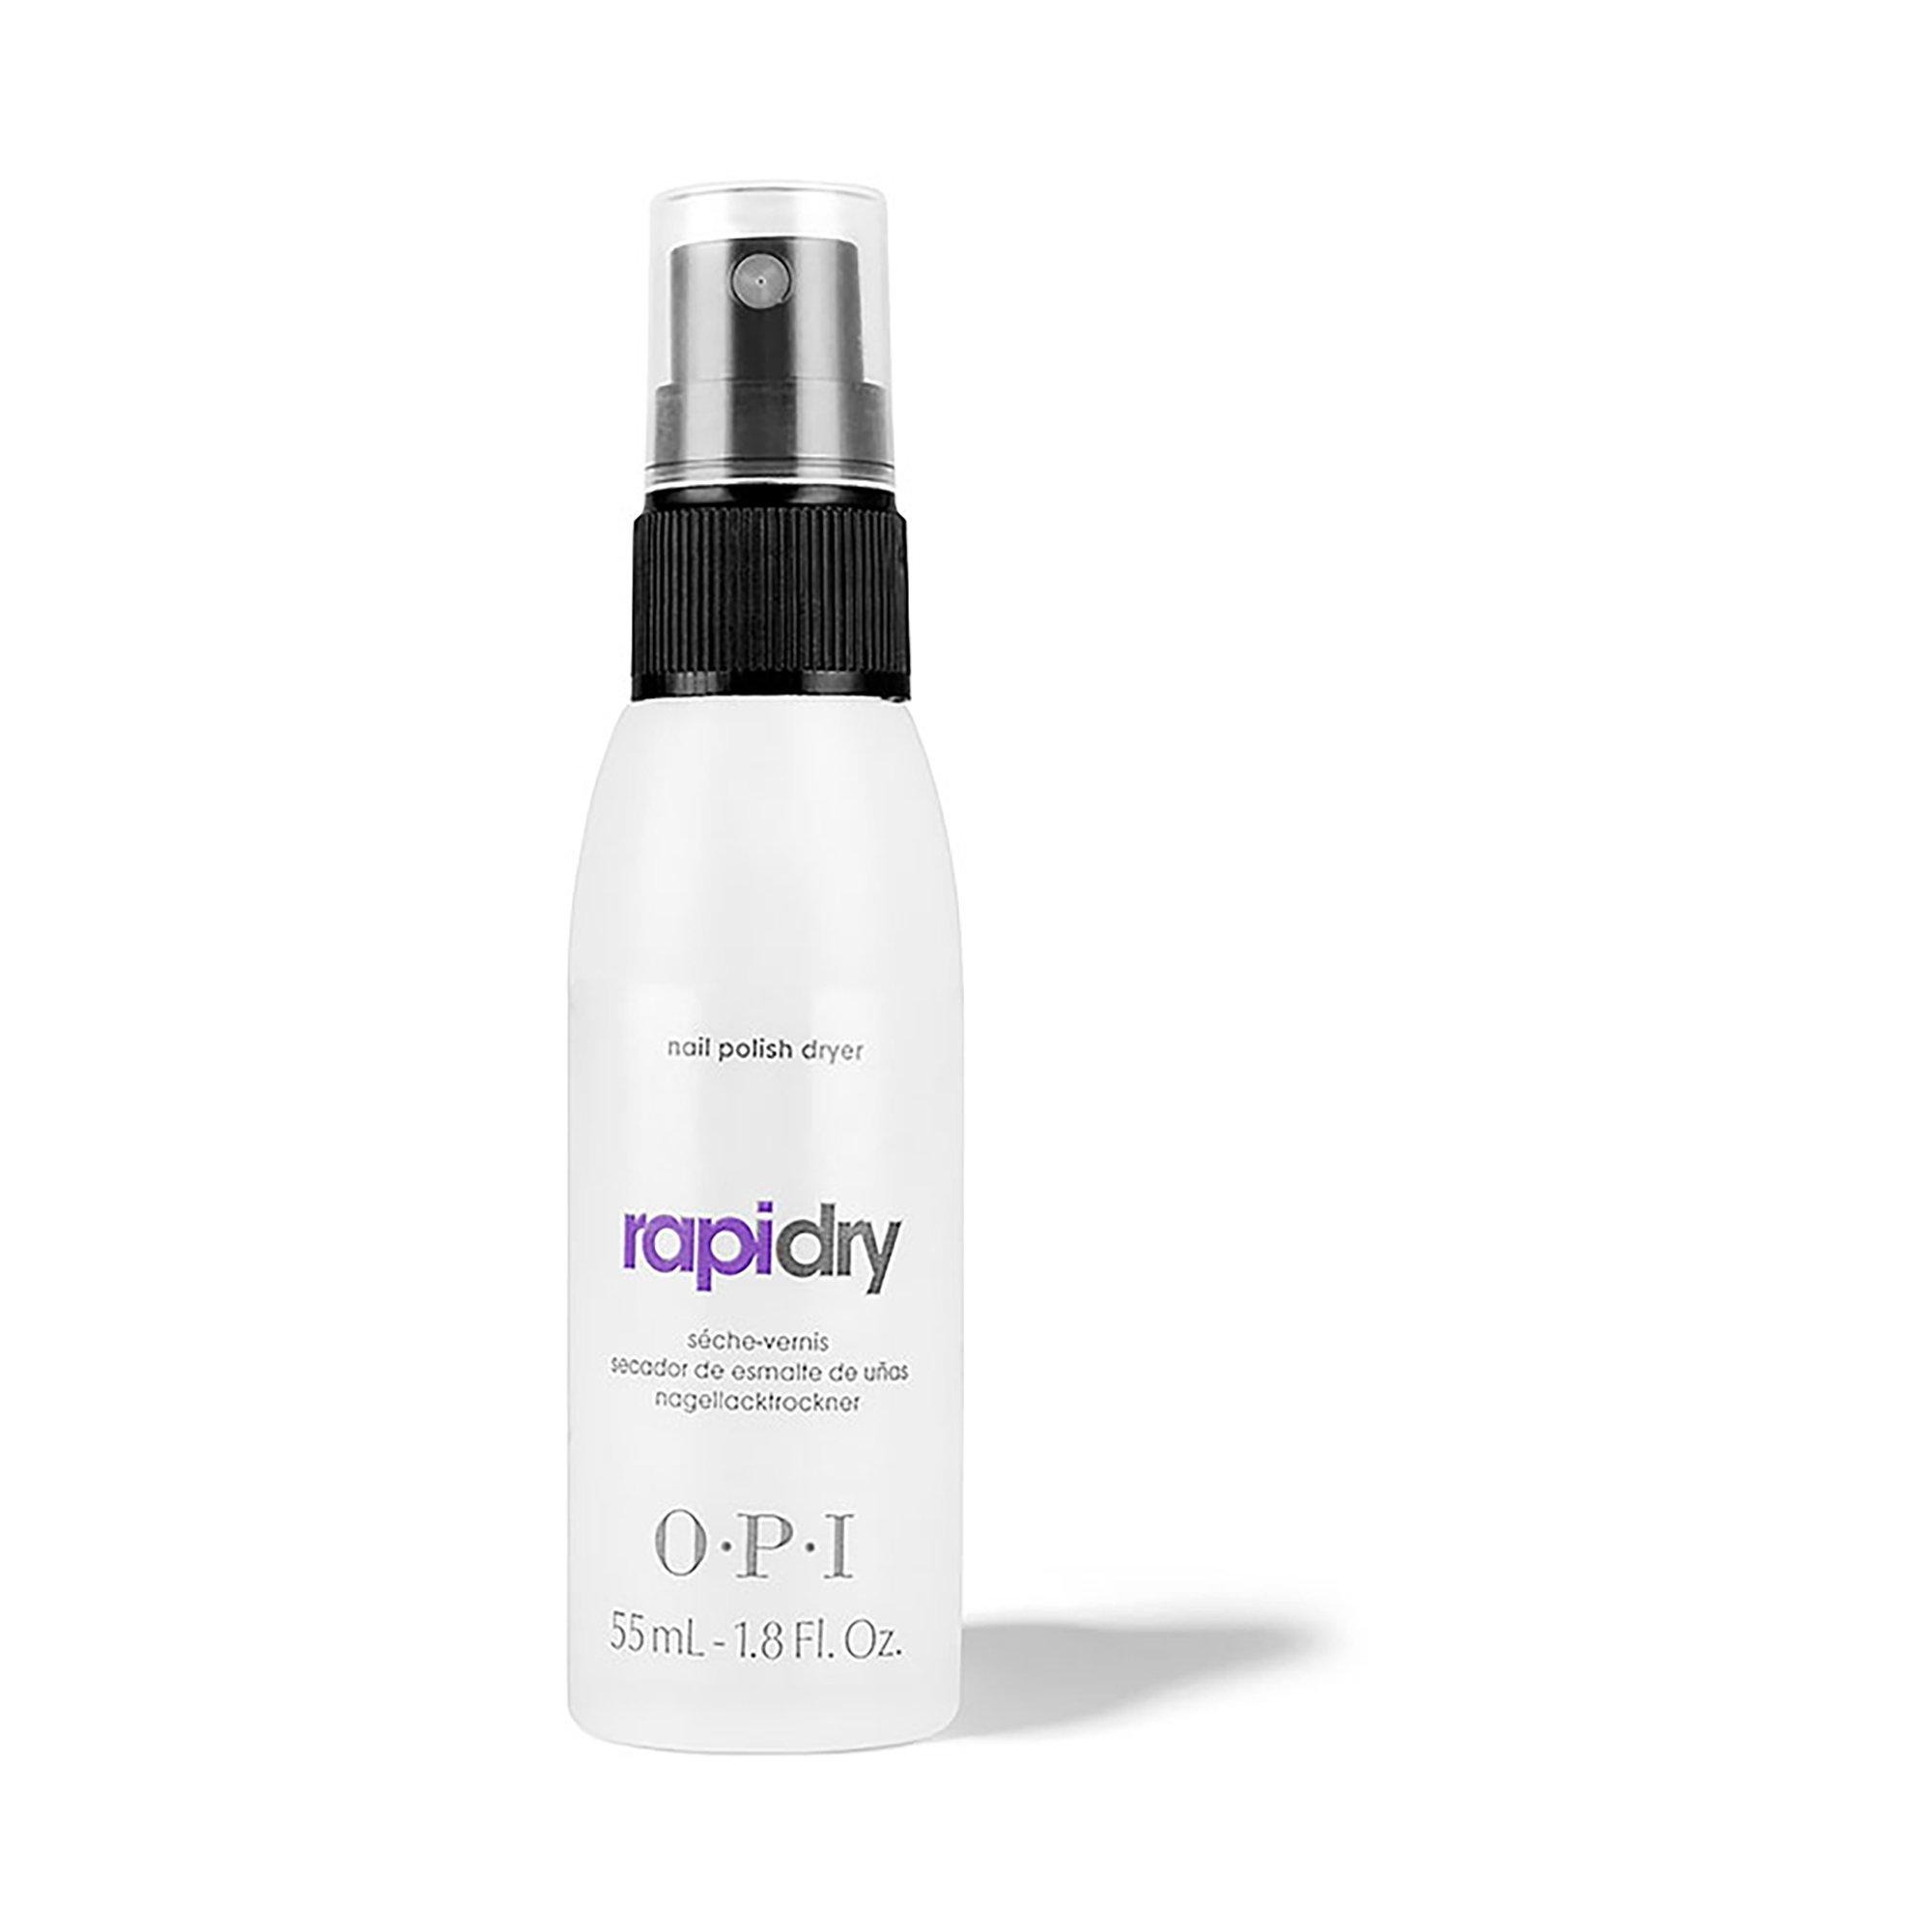 Image of OPI Schnelltrockner-Spray ? RapiDry Spray - 55ml